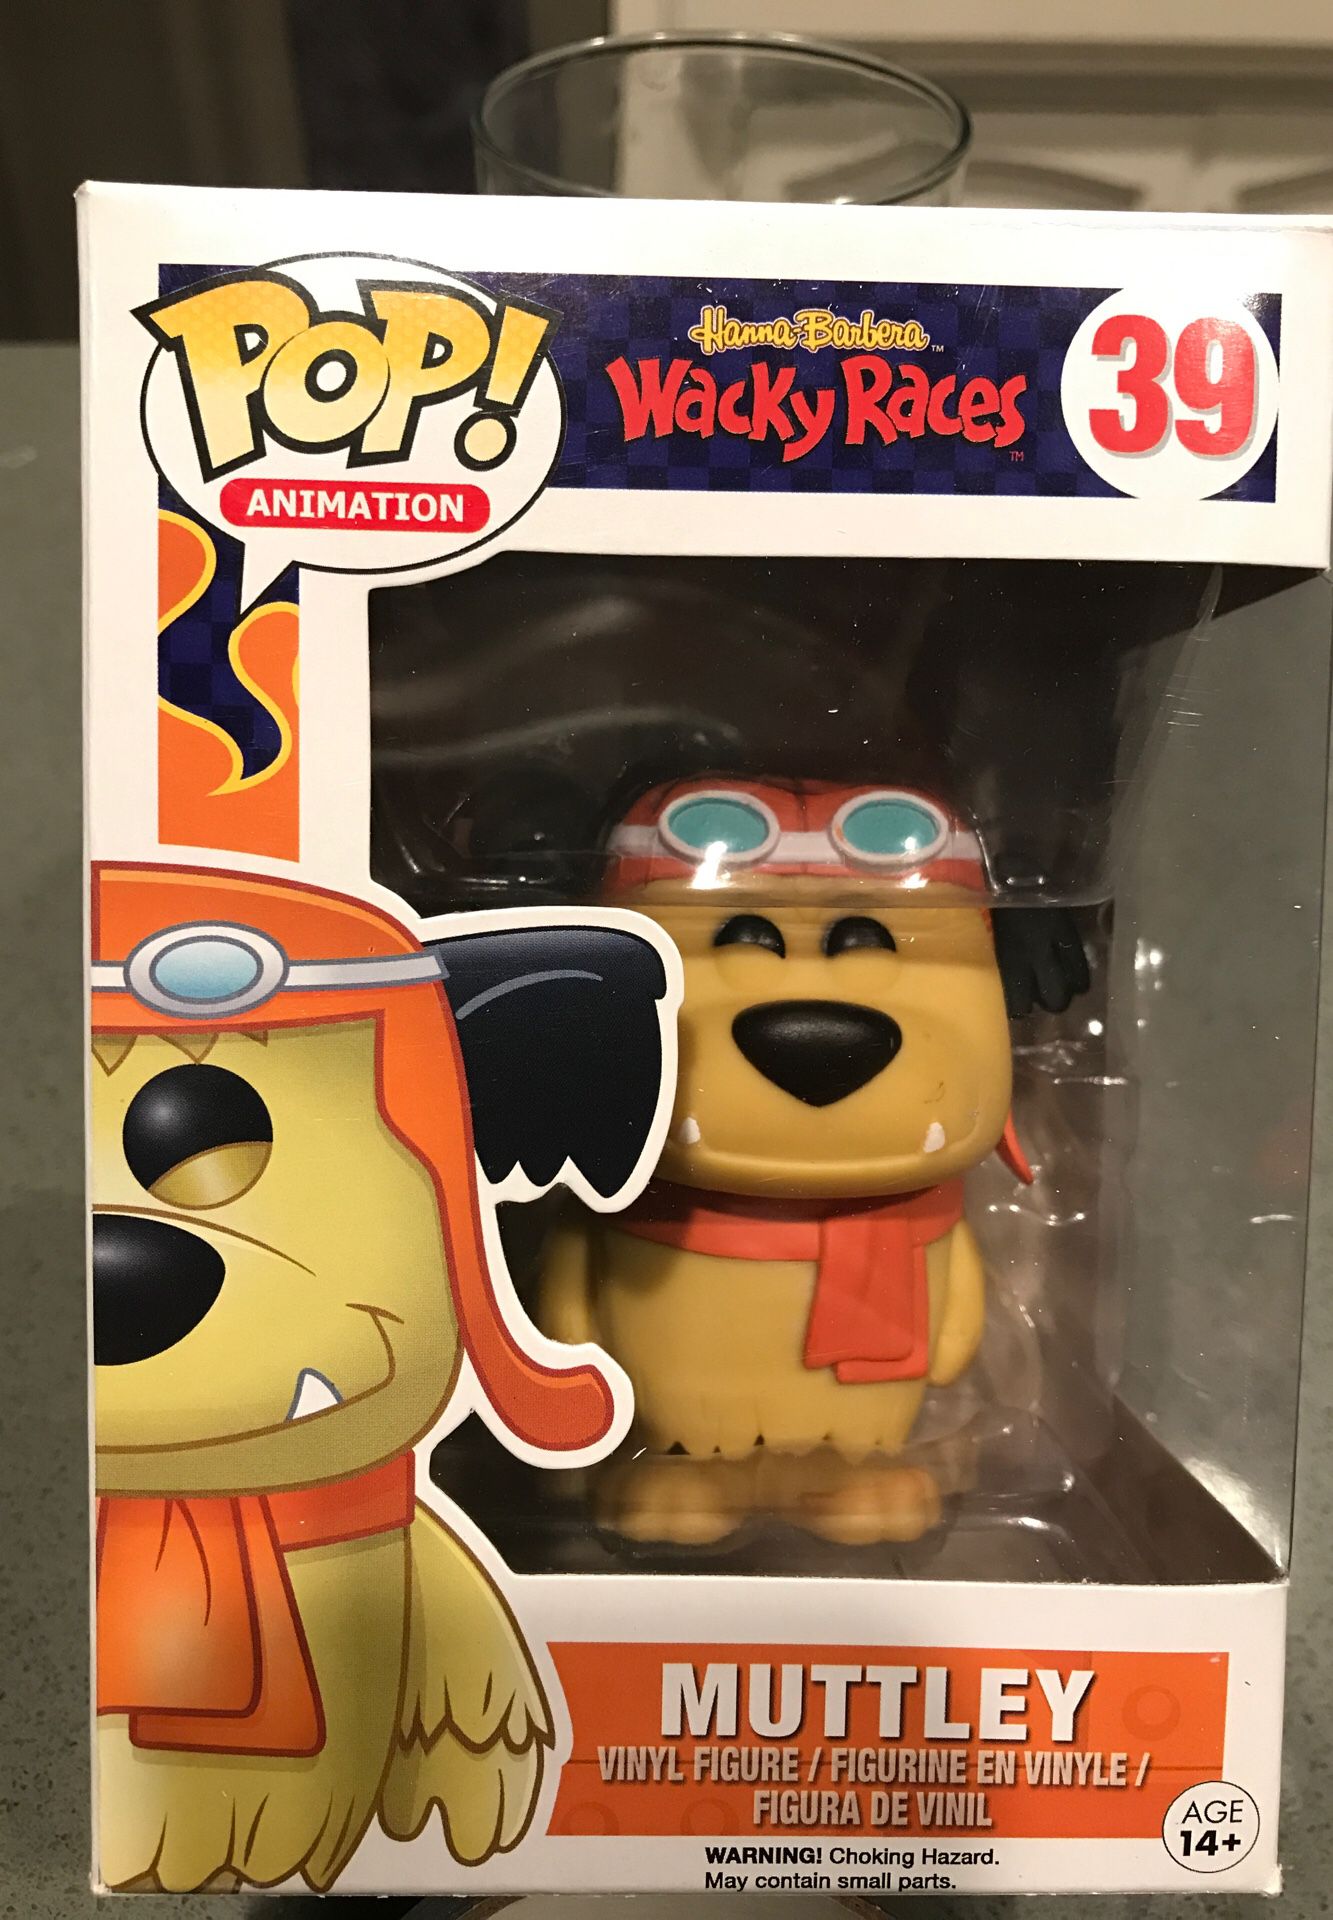 Pop! Wacky races muttley vinyl figure, figurine toy